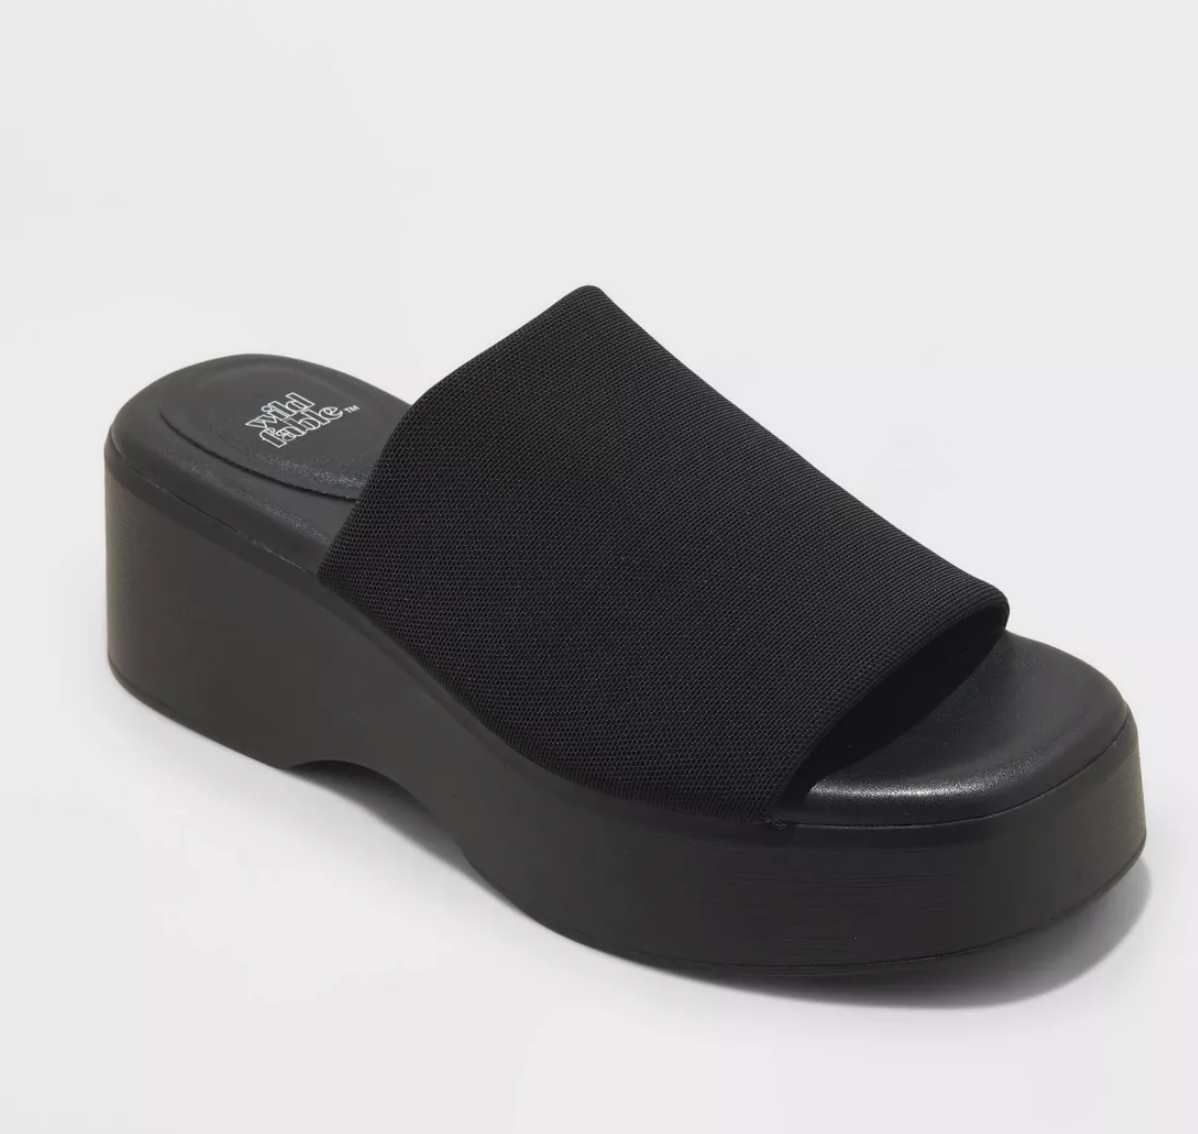 Black platform sandal with a single wide strap